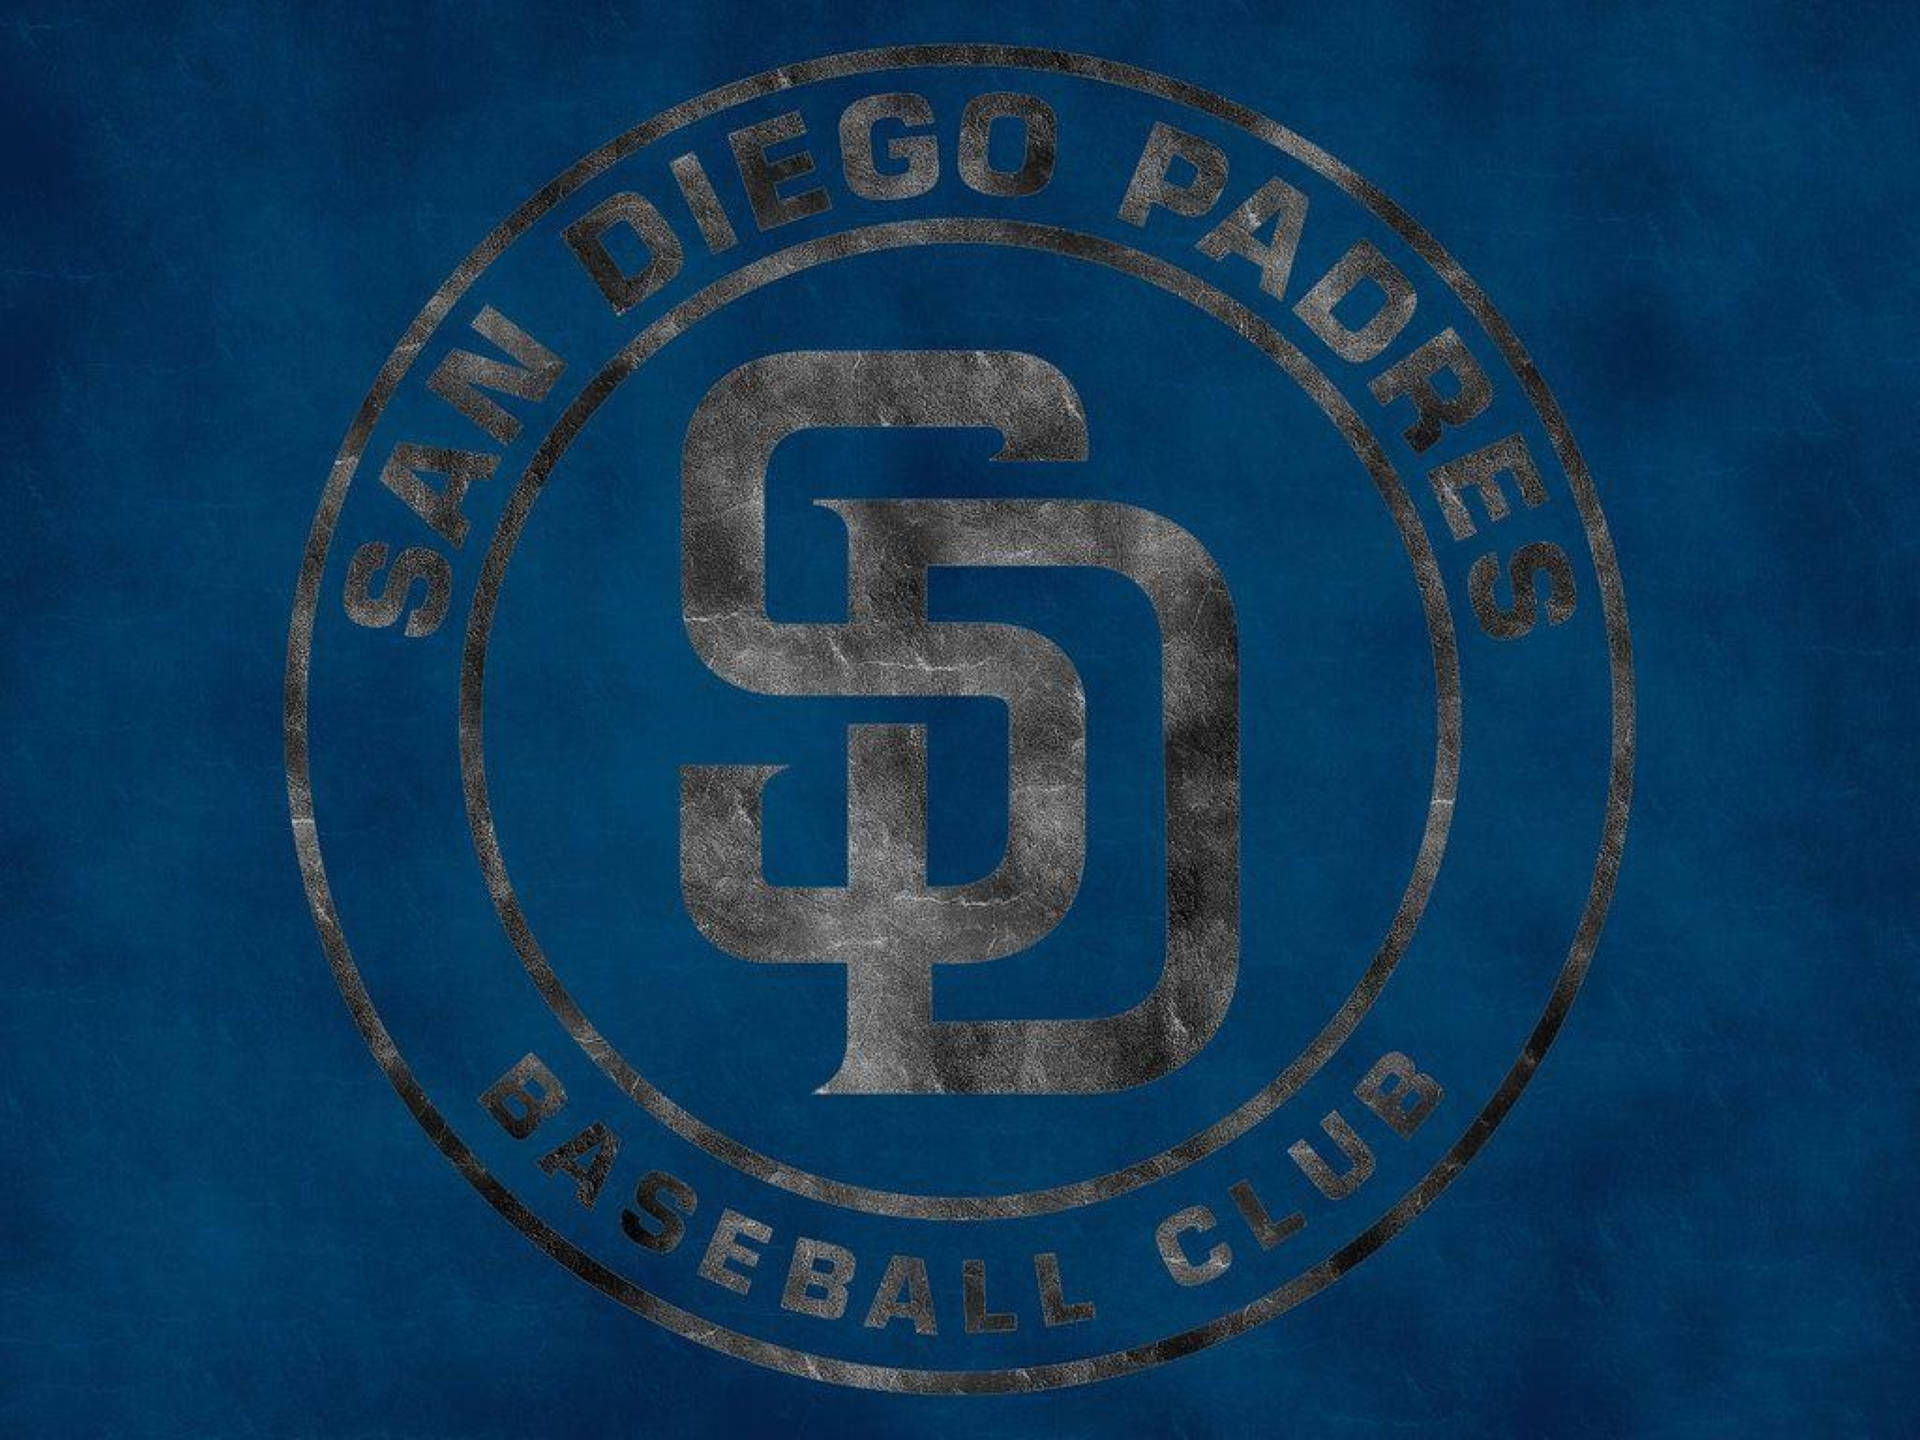 San Diego Padres Baseball Club Background